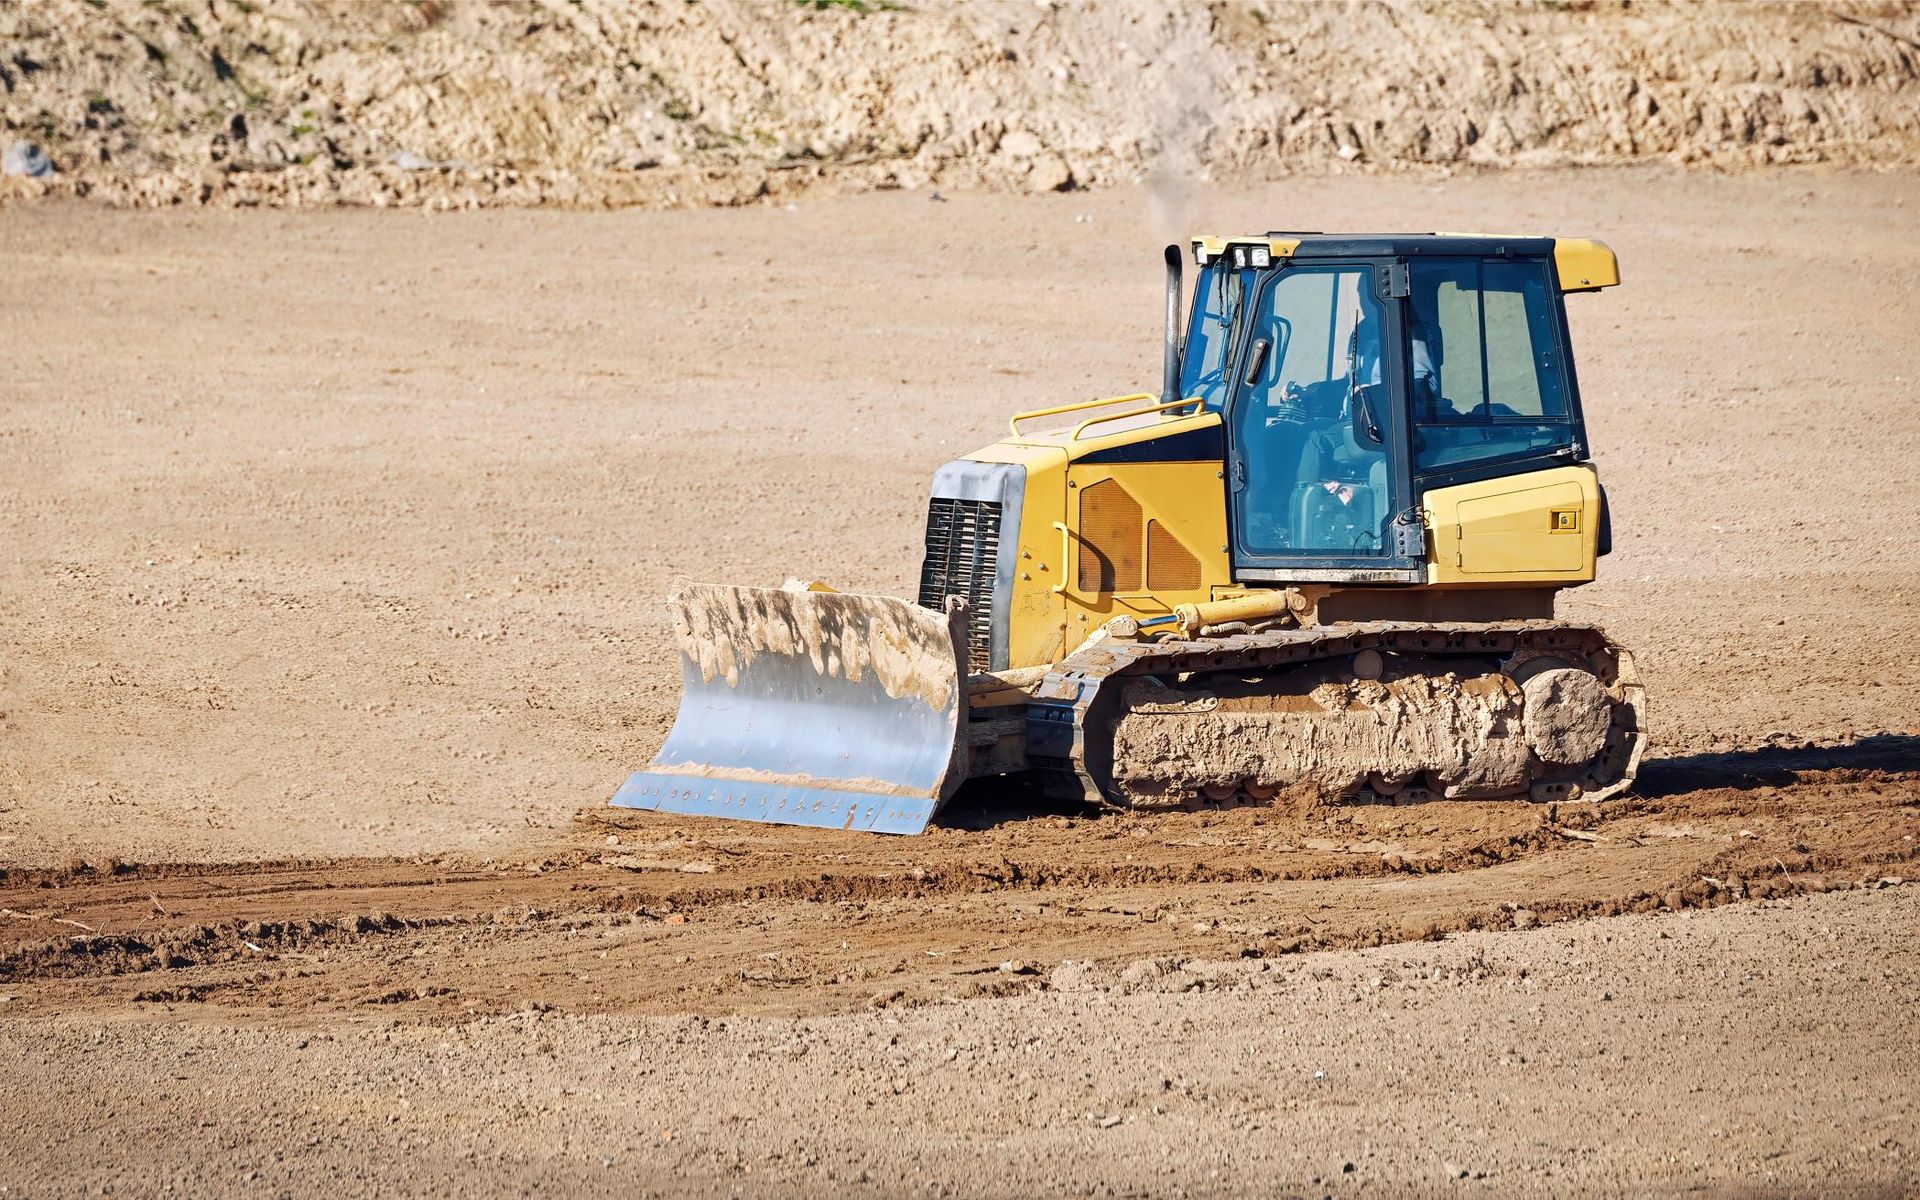 A bulldozer is driving through a dirt field.